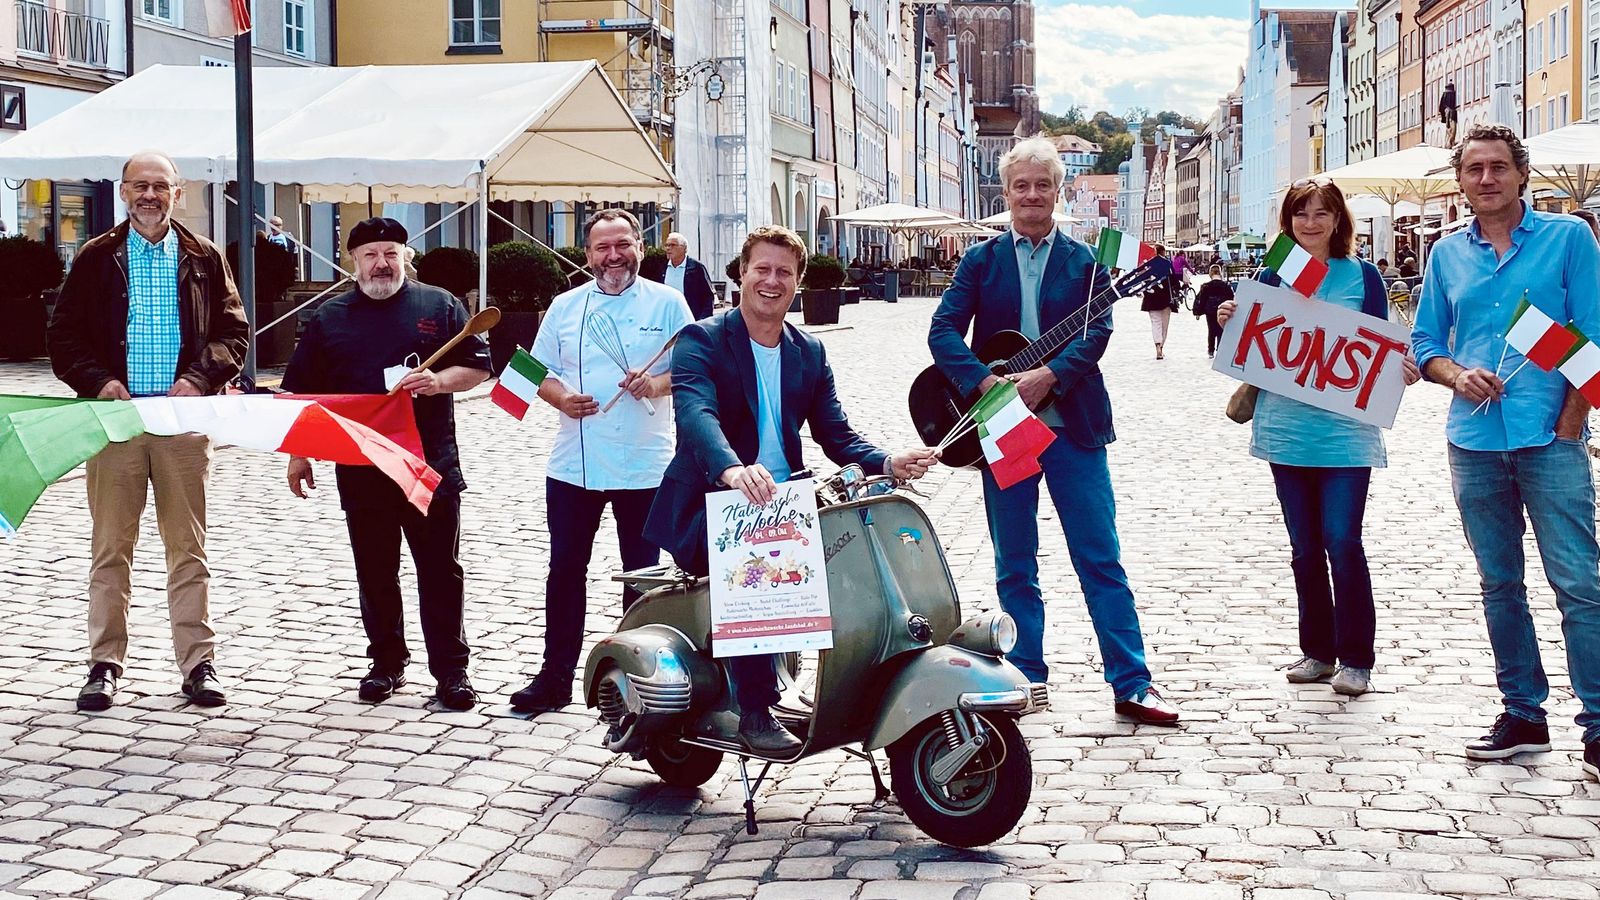 Settimana italiana: Landshut festeggia la partnership con Schio